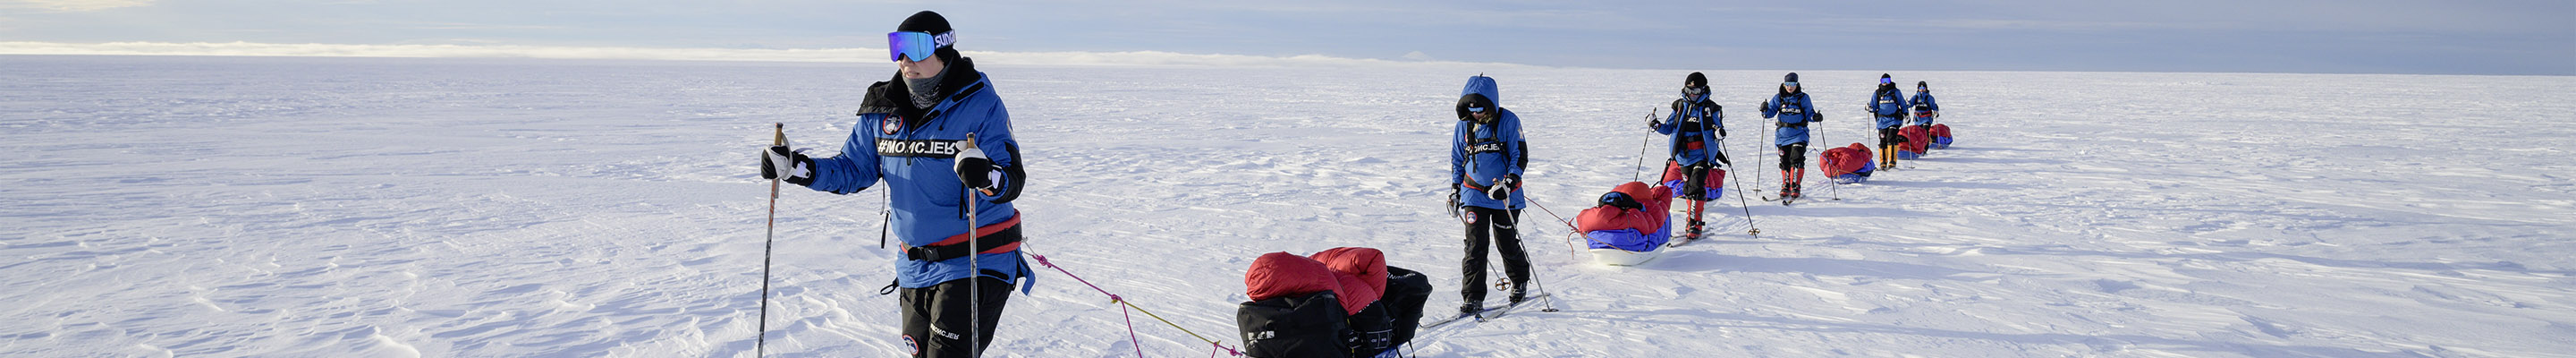 Explorers pulling sleds through snowy landscape